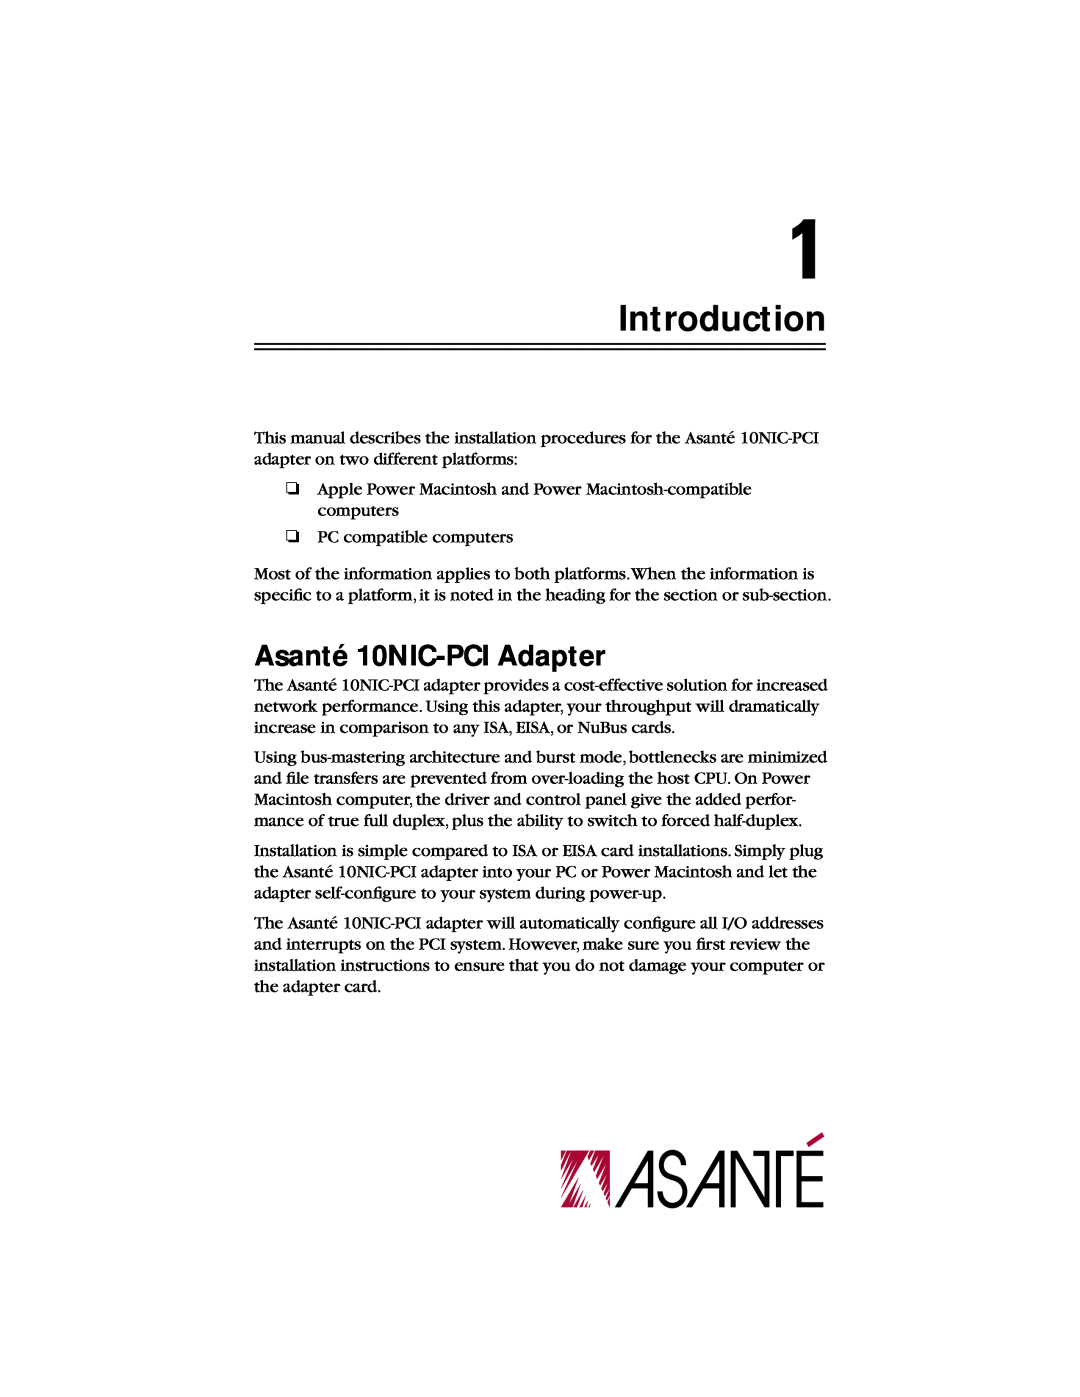 Asante Technologies 10NIC-PCITM manual Introduction, Asanté 10NIC-PCI Adapter 